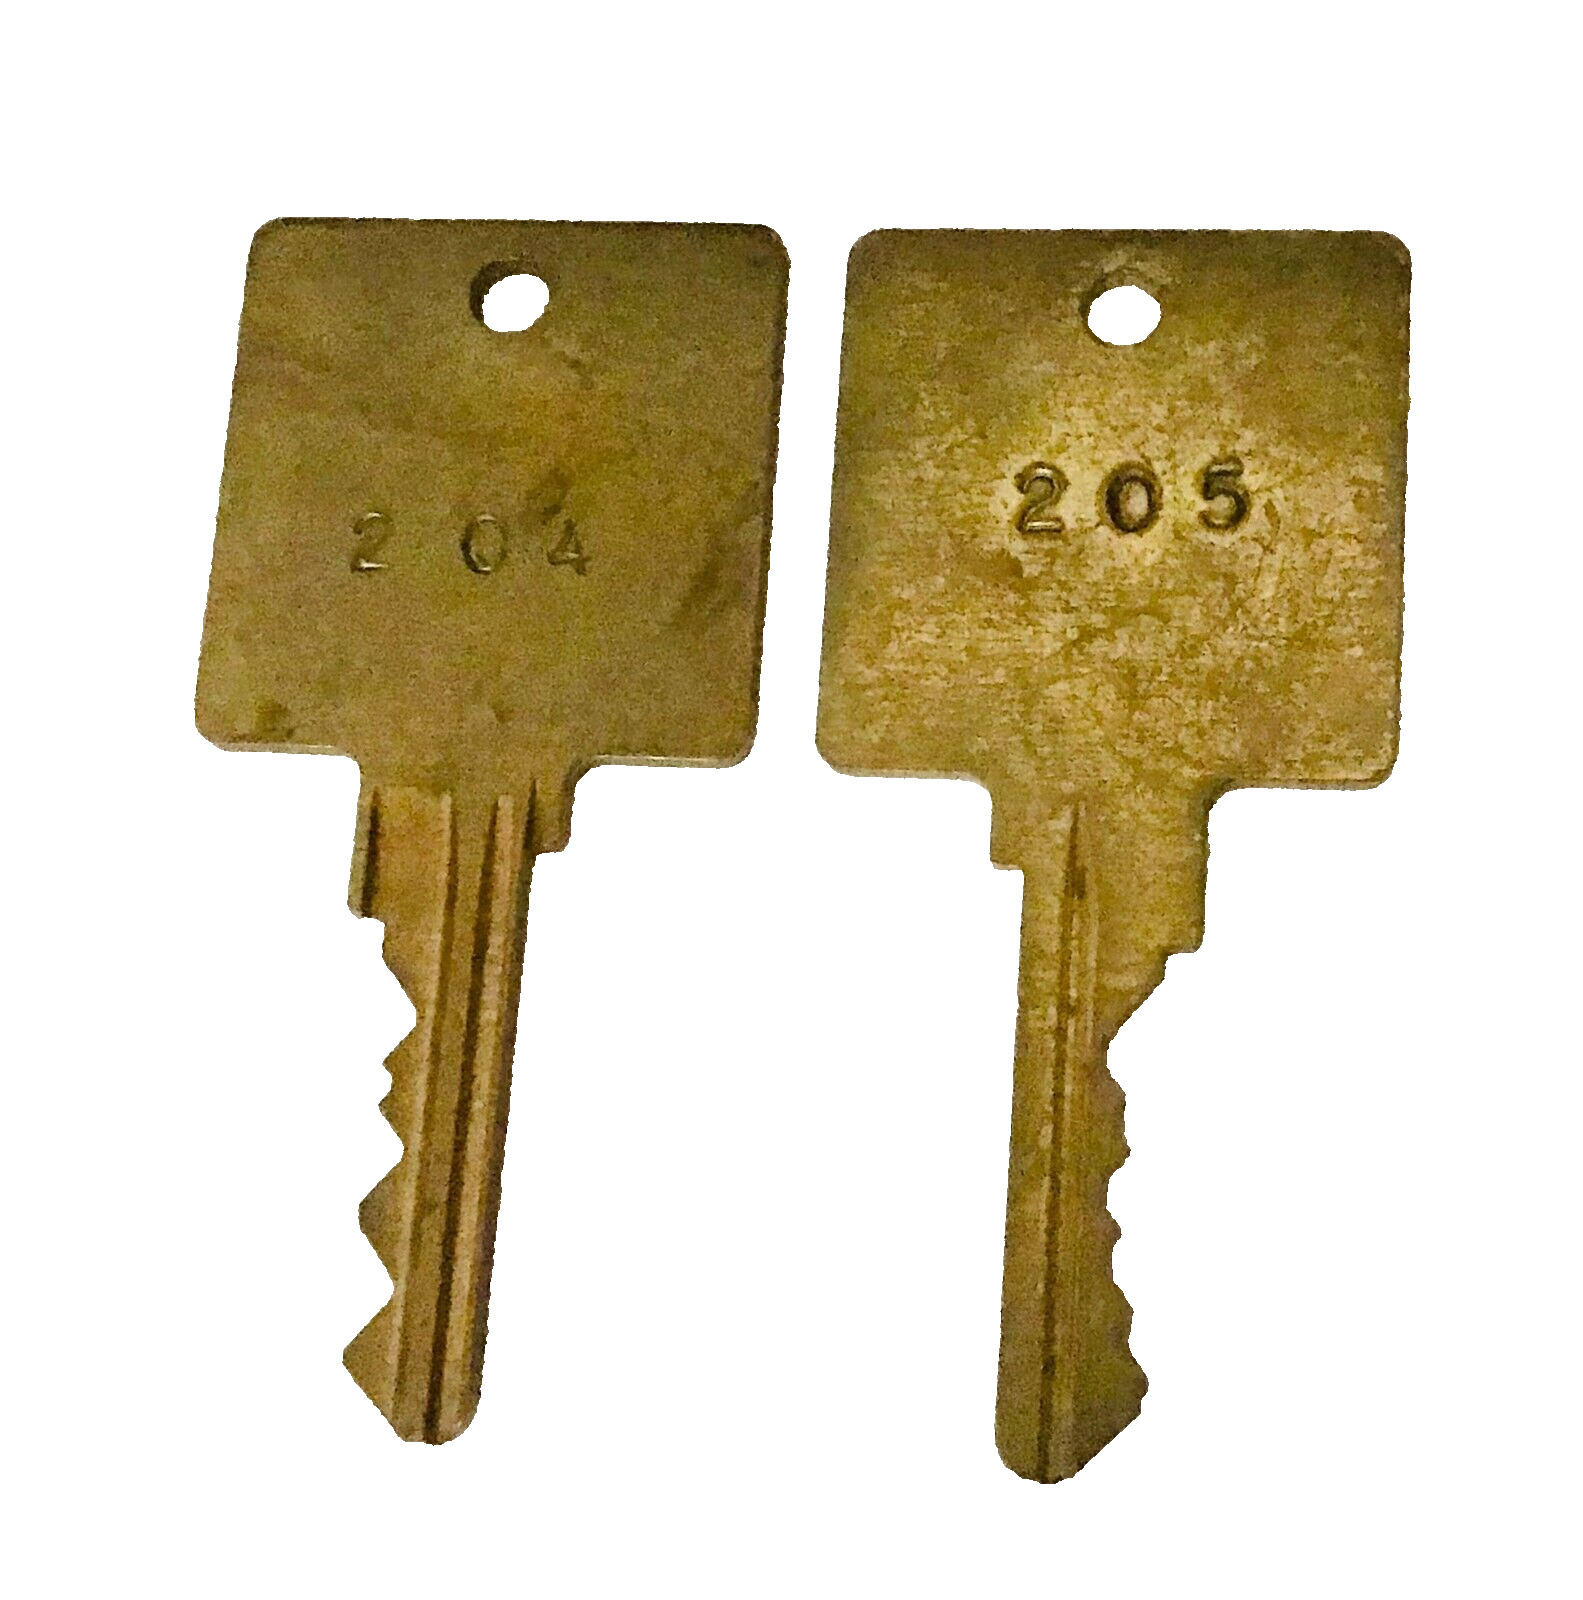 2 Vintage Brass Hotel Keys #204 & #205 Pair No Name No Location Square Heads USA